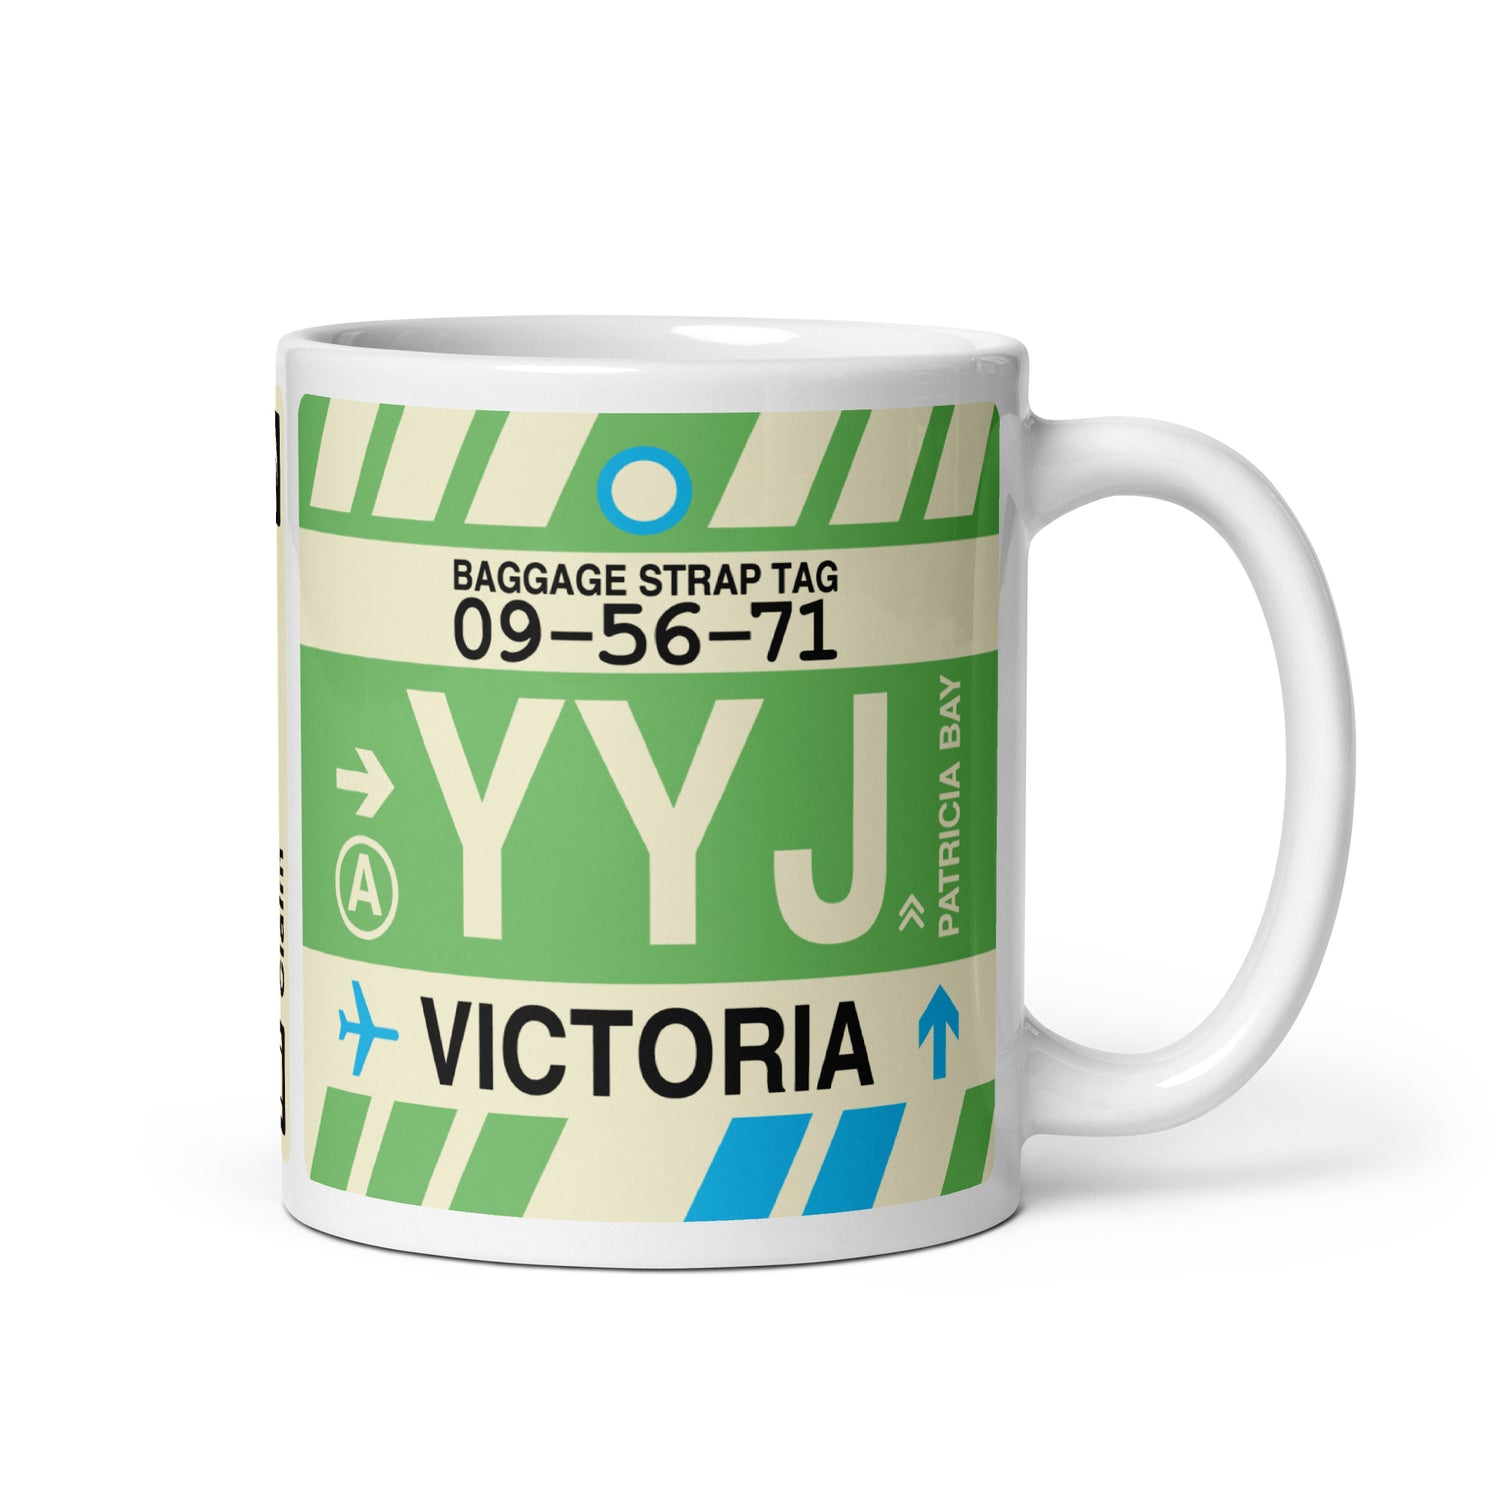 Victoria British Columbia Baggage Tag Designs • YYJ Airport Code